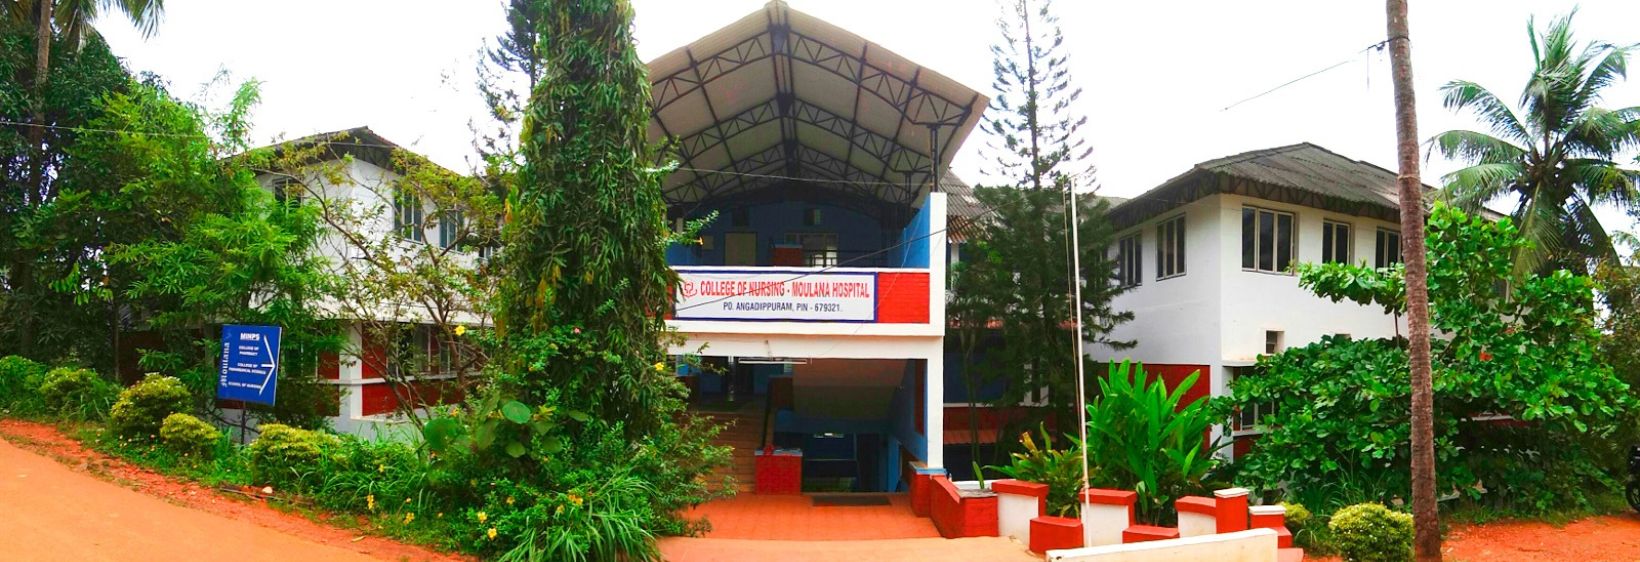 Moulana College of Nursing - Malappuram